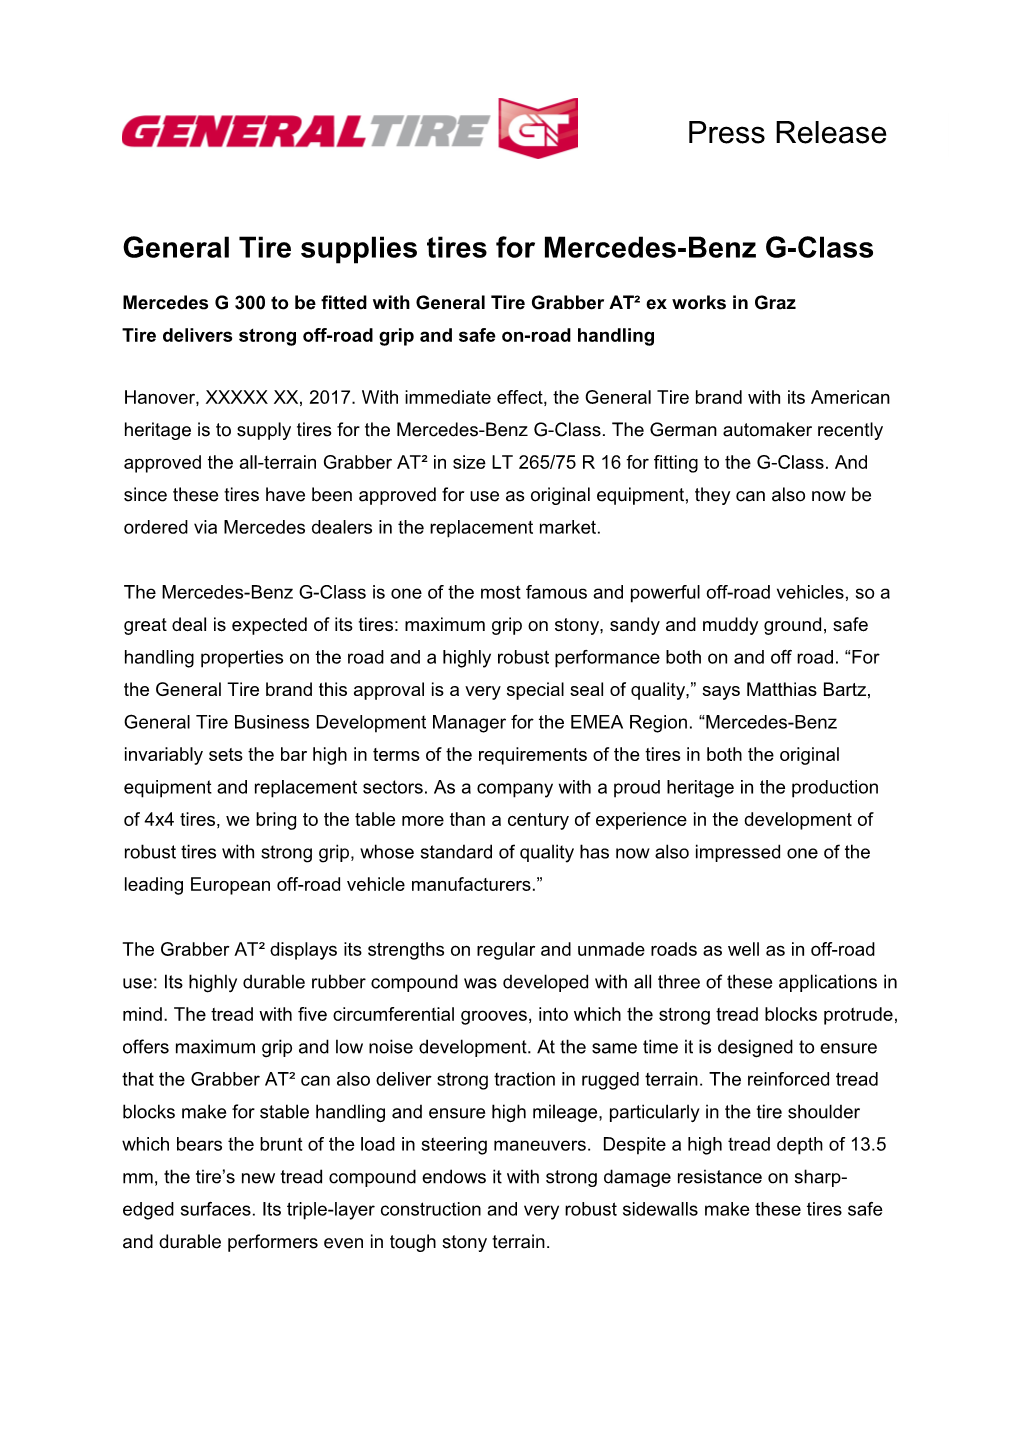 General Tire Supplies Tires for Mercedes-Benz G-Class